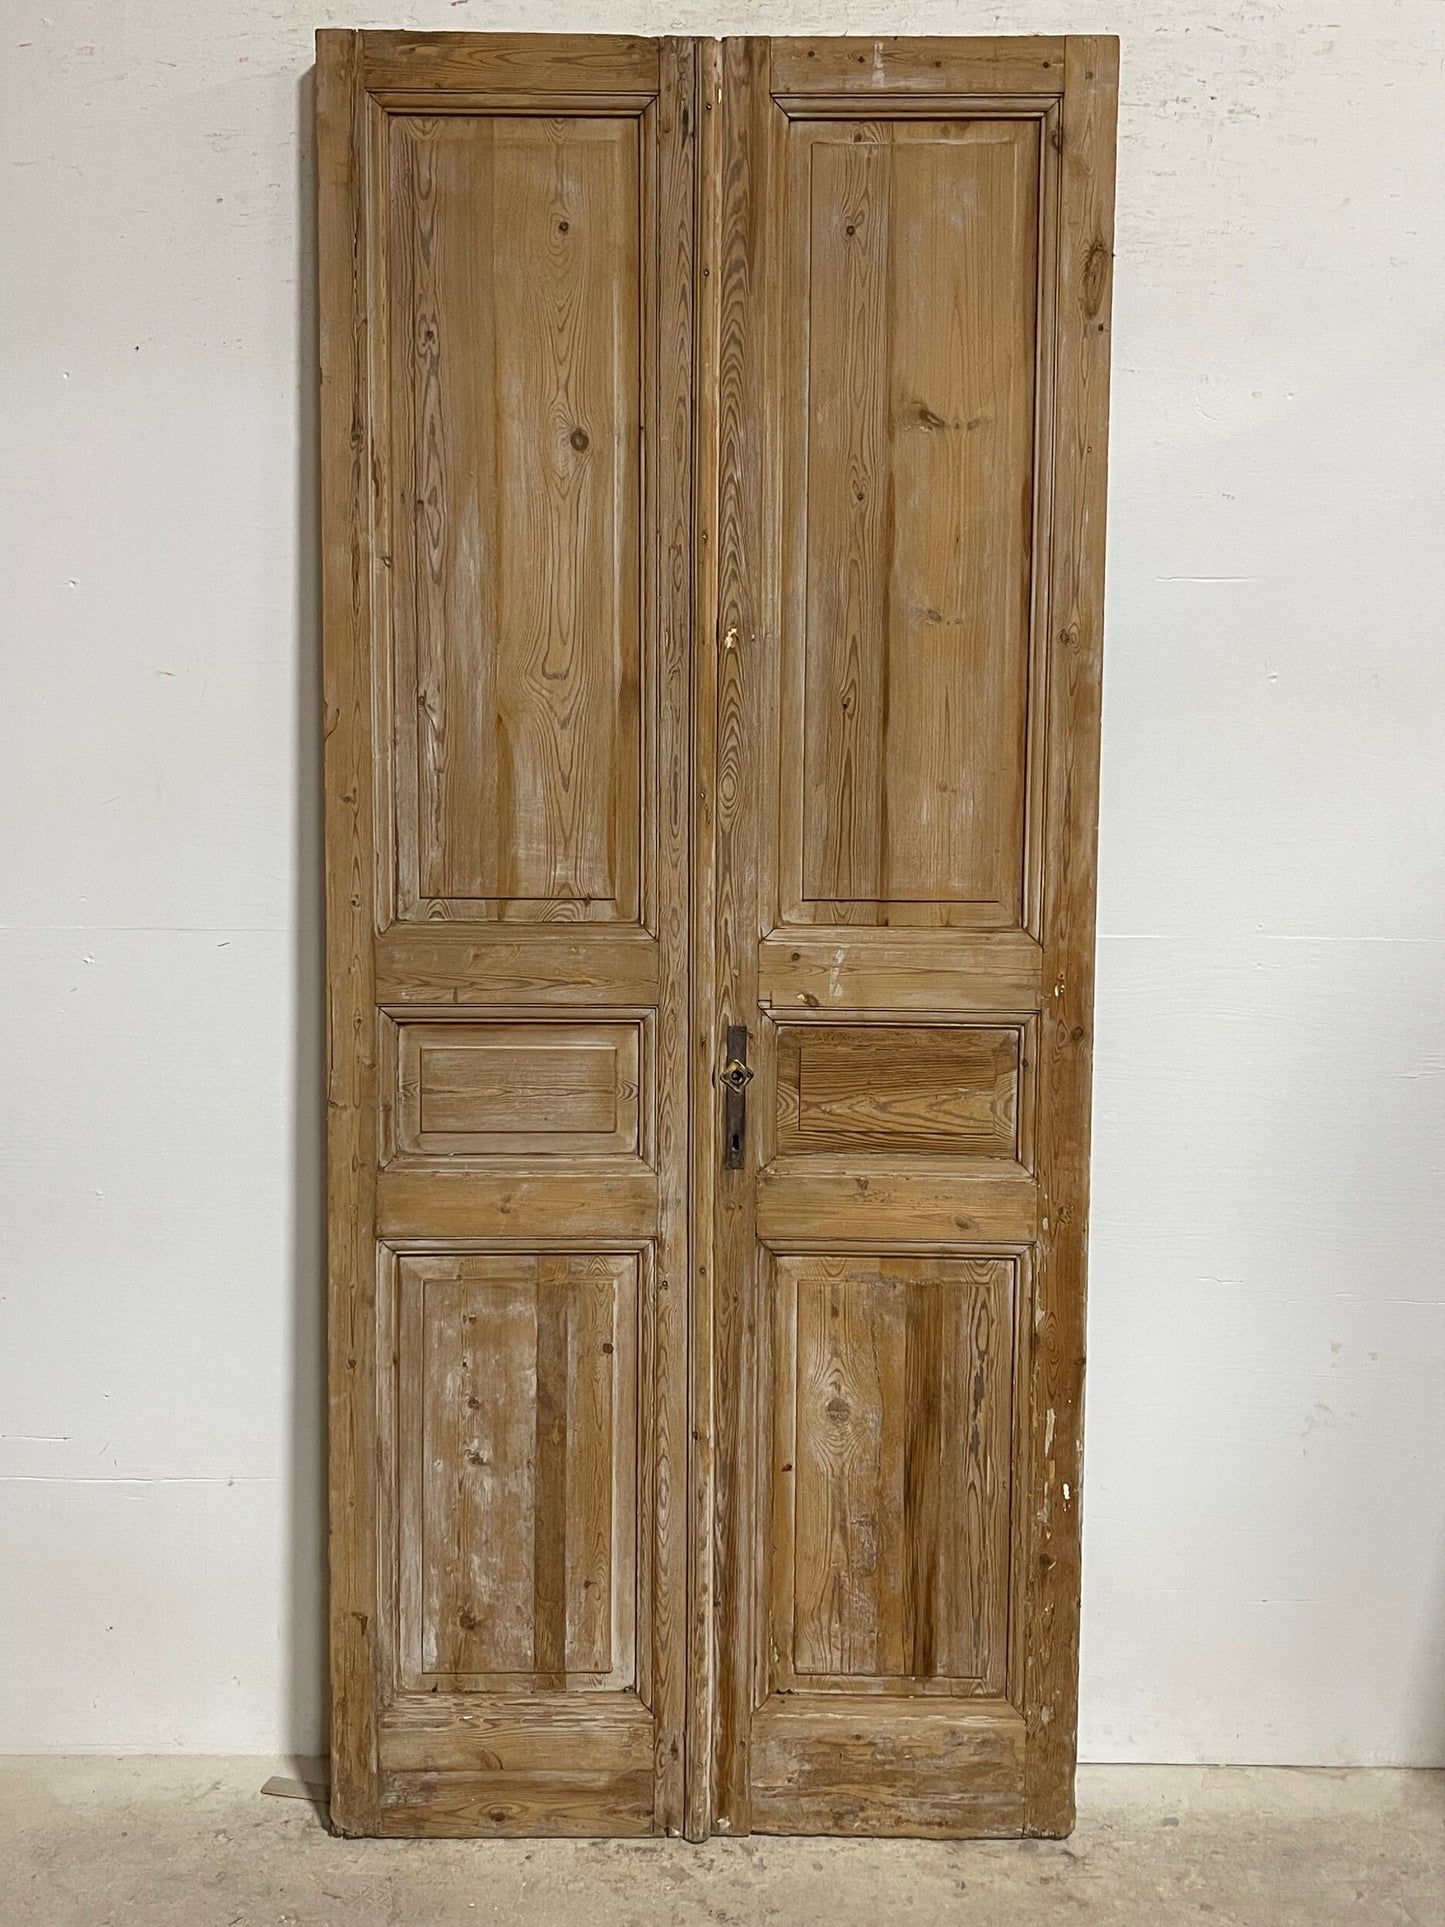 Antique french panel doors (93 x 40) I101